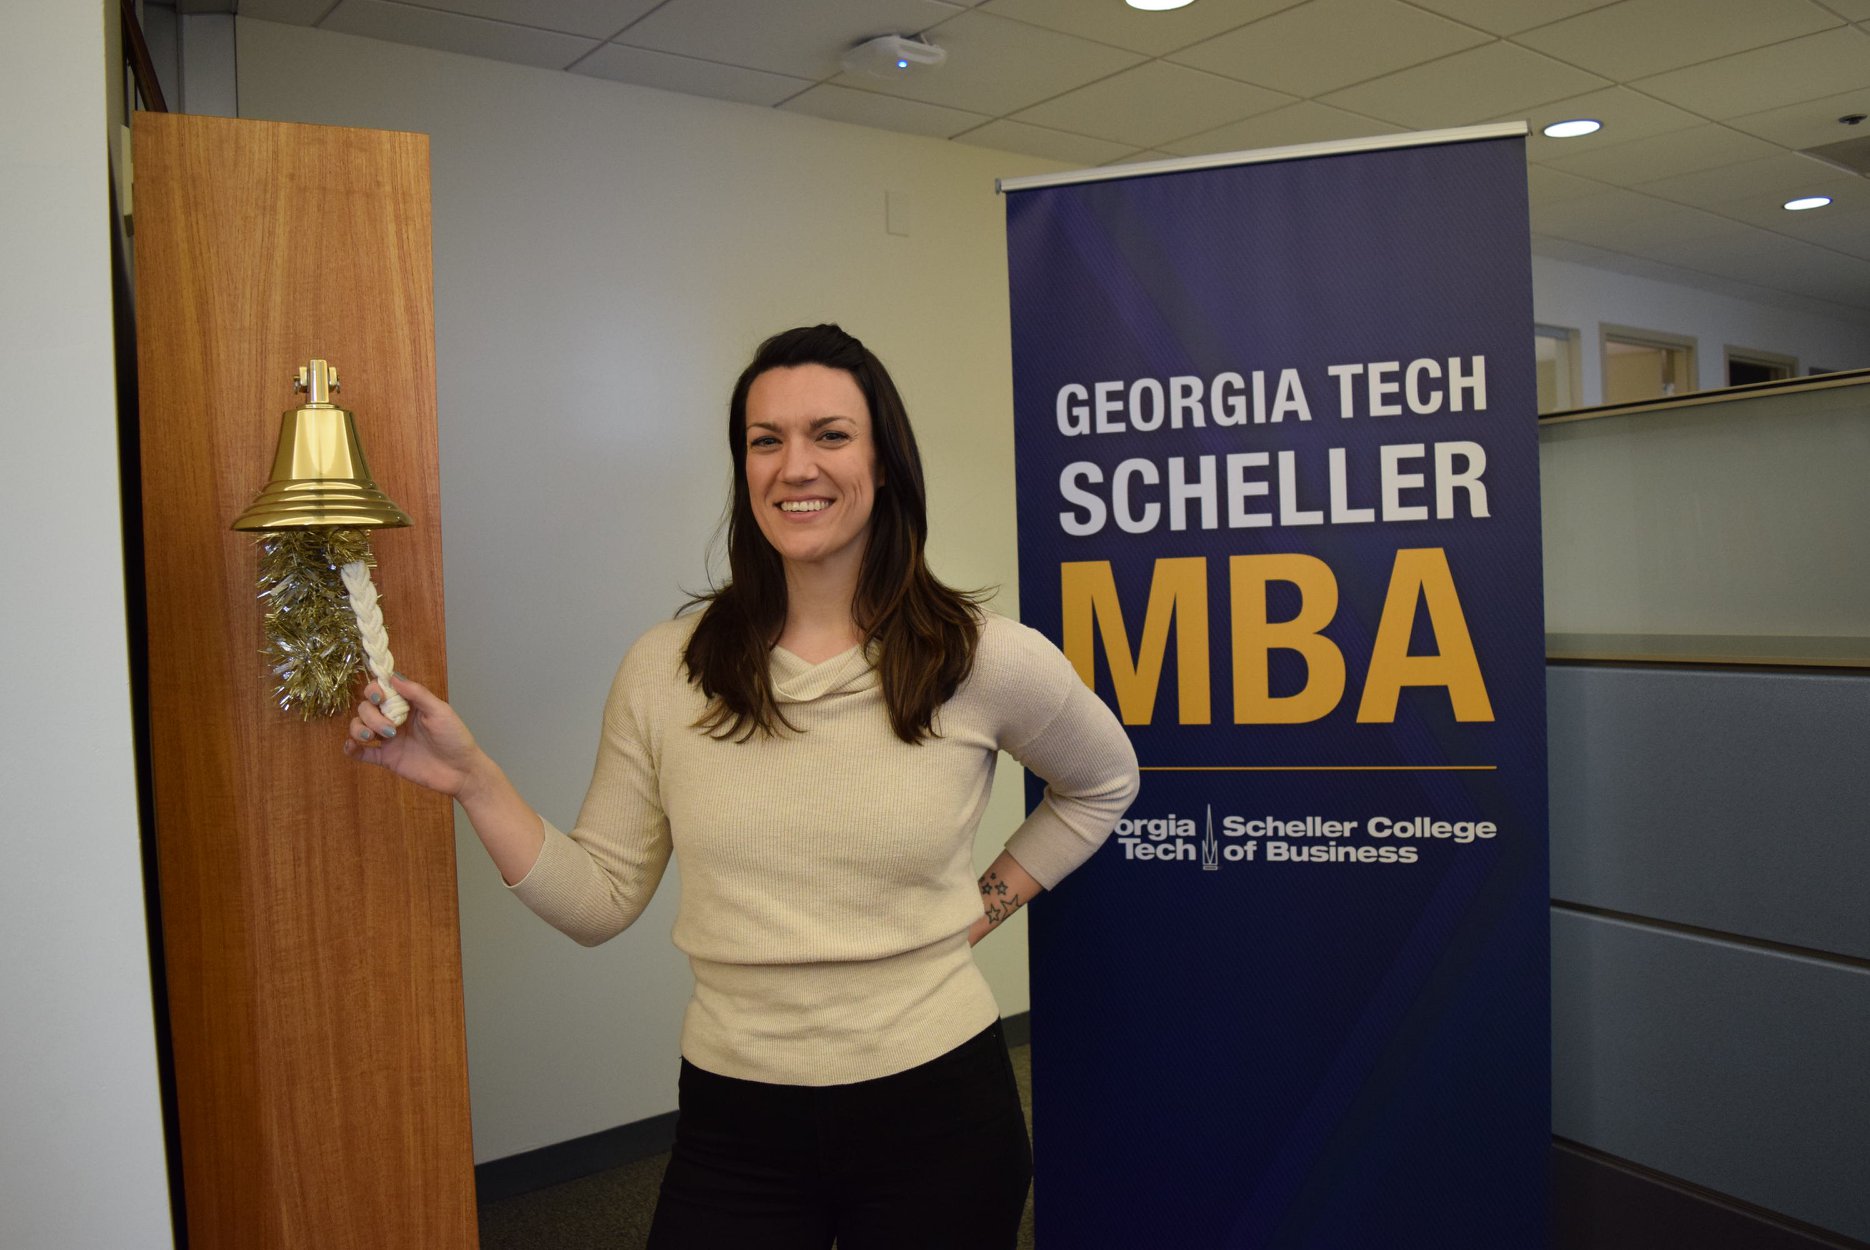 MBA student Nona Black rings a bell in the MBA Jones Career Center